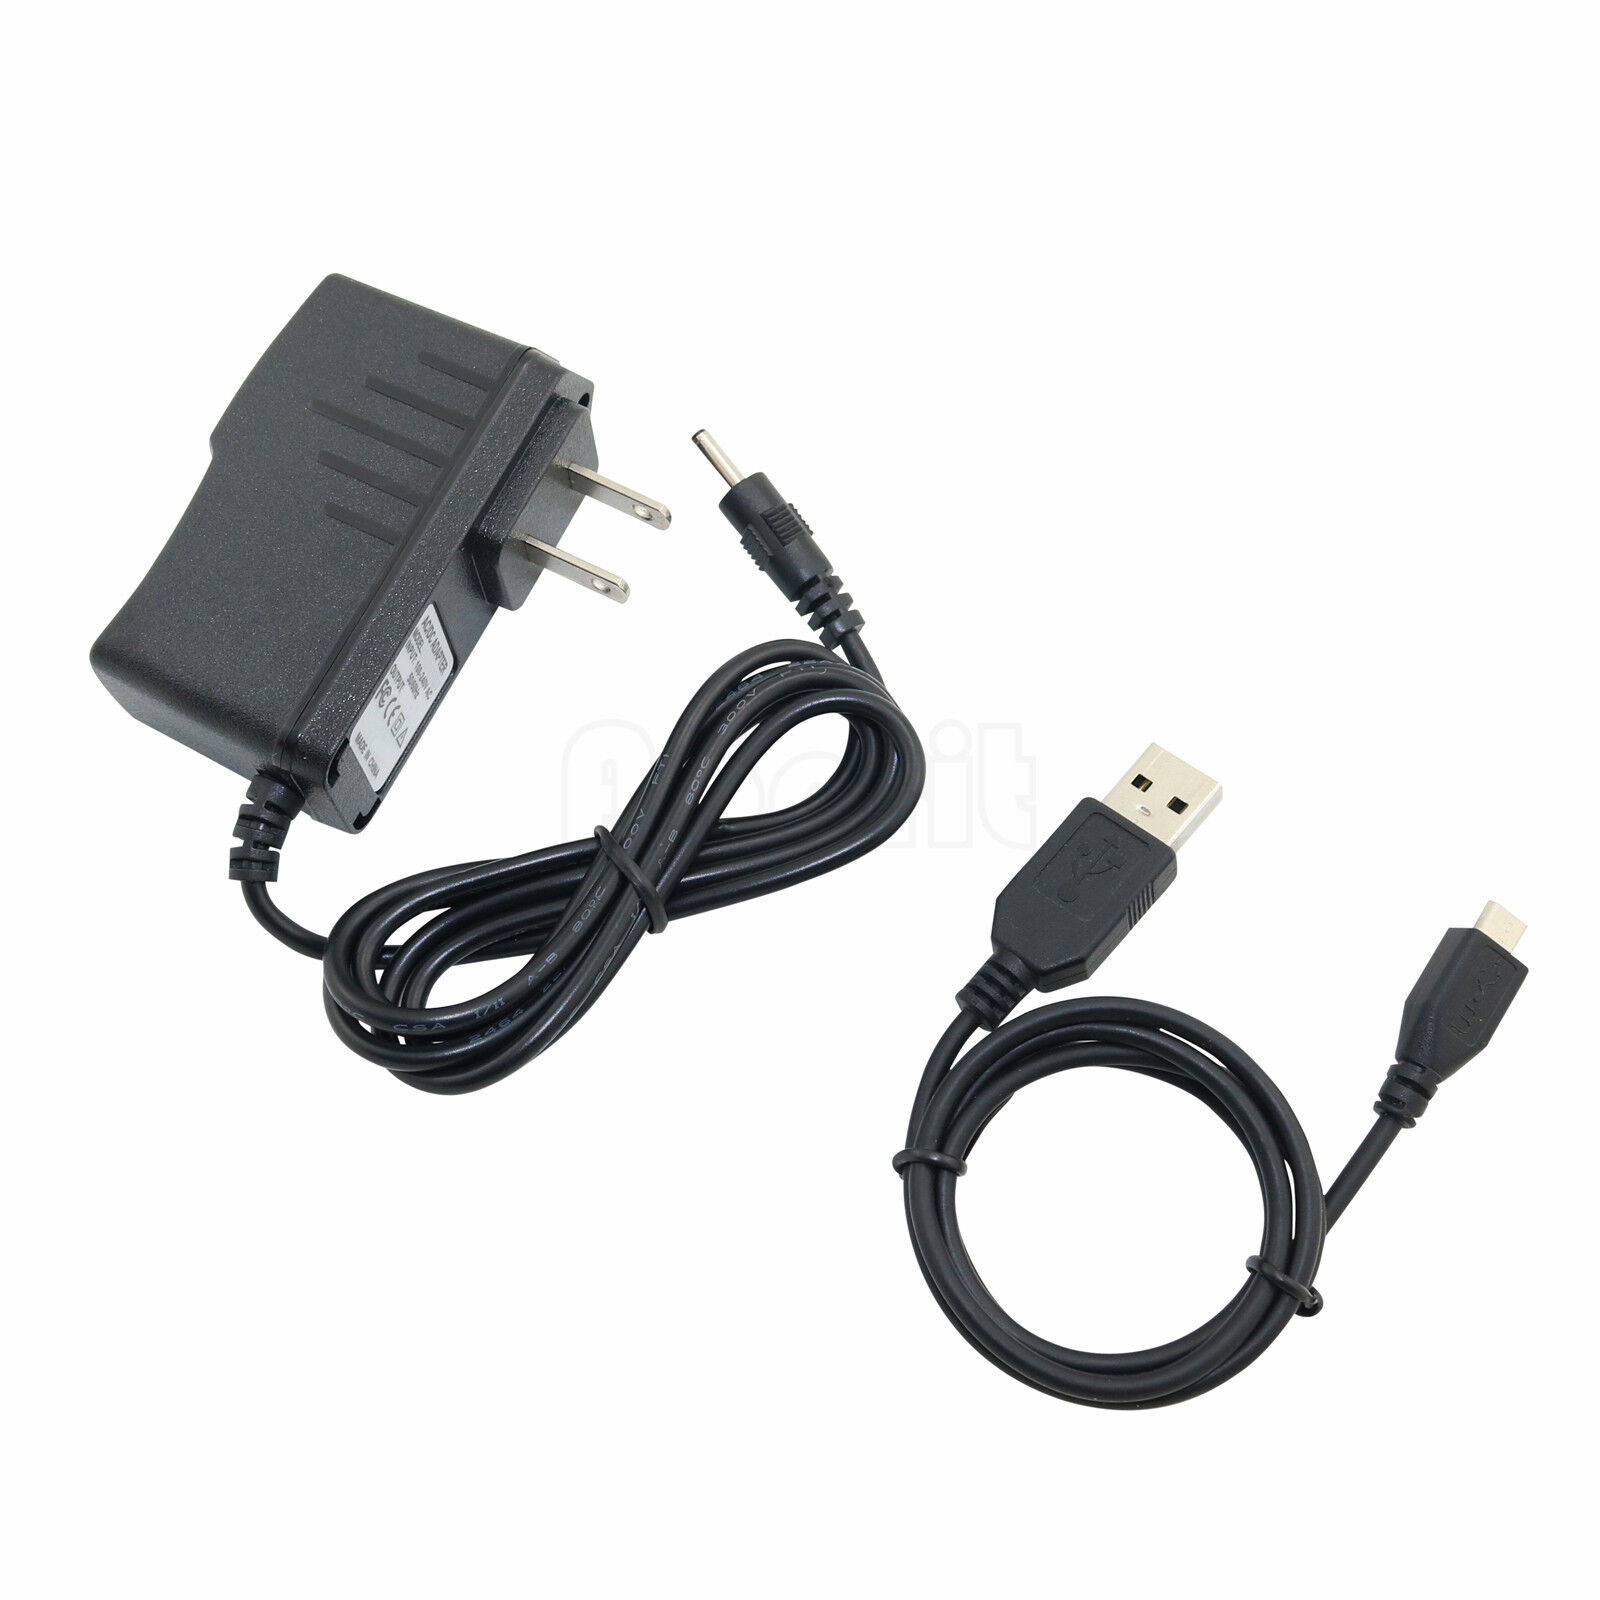 19V 0.6A AC DC Power Adapter Charge for ILIFE V3 V5 Robot Vacuum Cleaner PSU Input : 110~240V AC 50/60HZ Output : DC